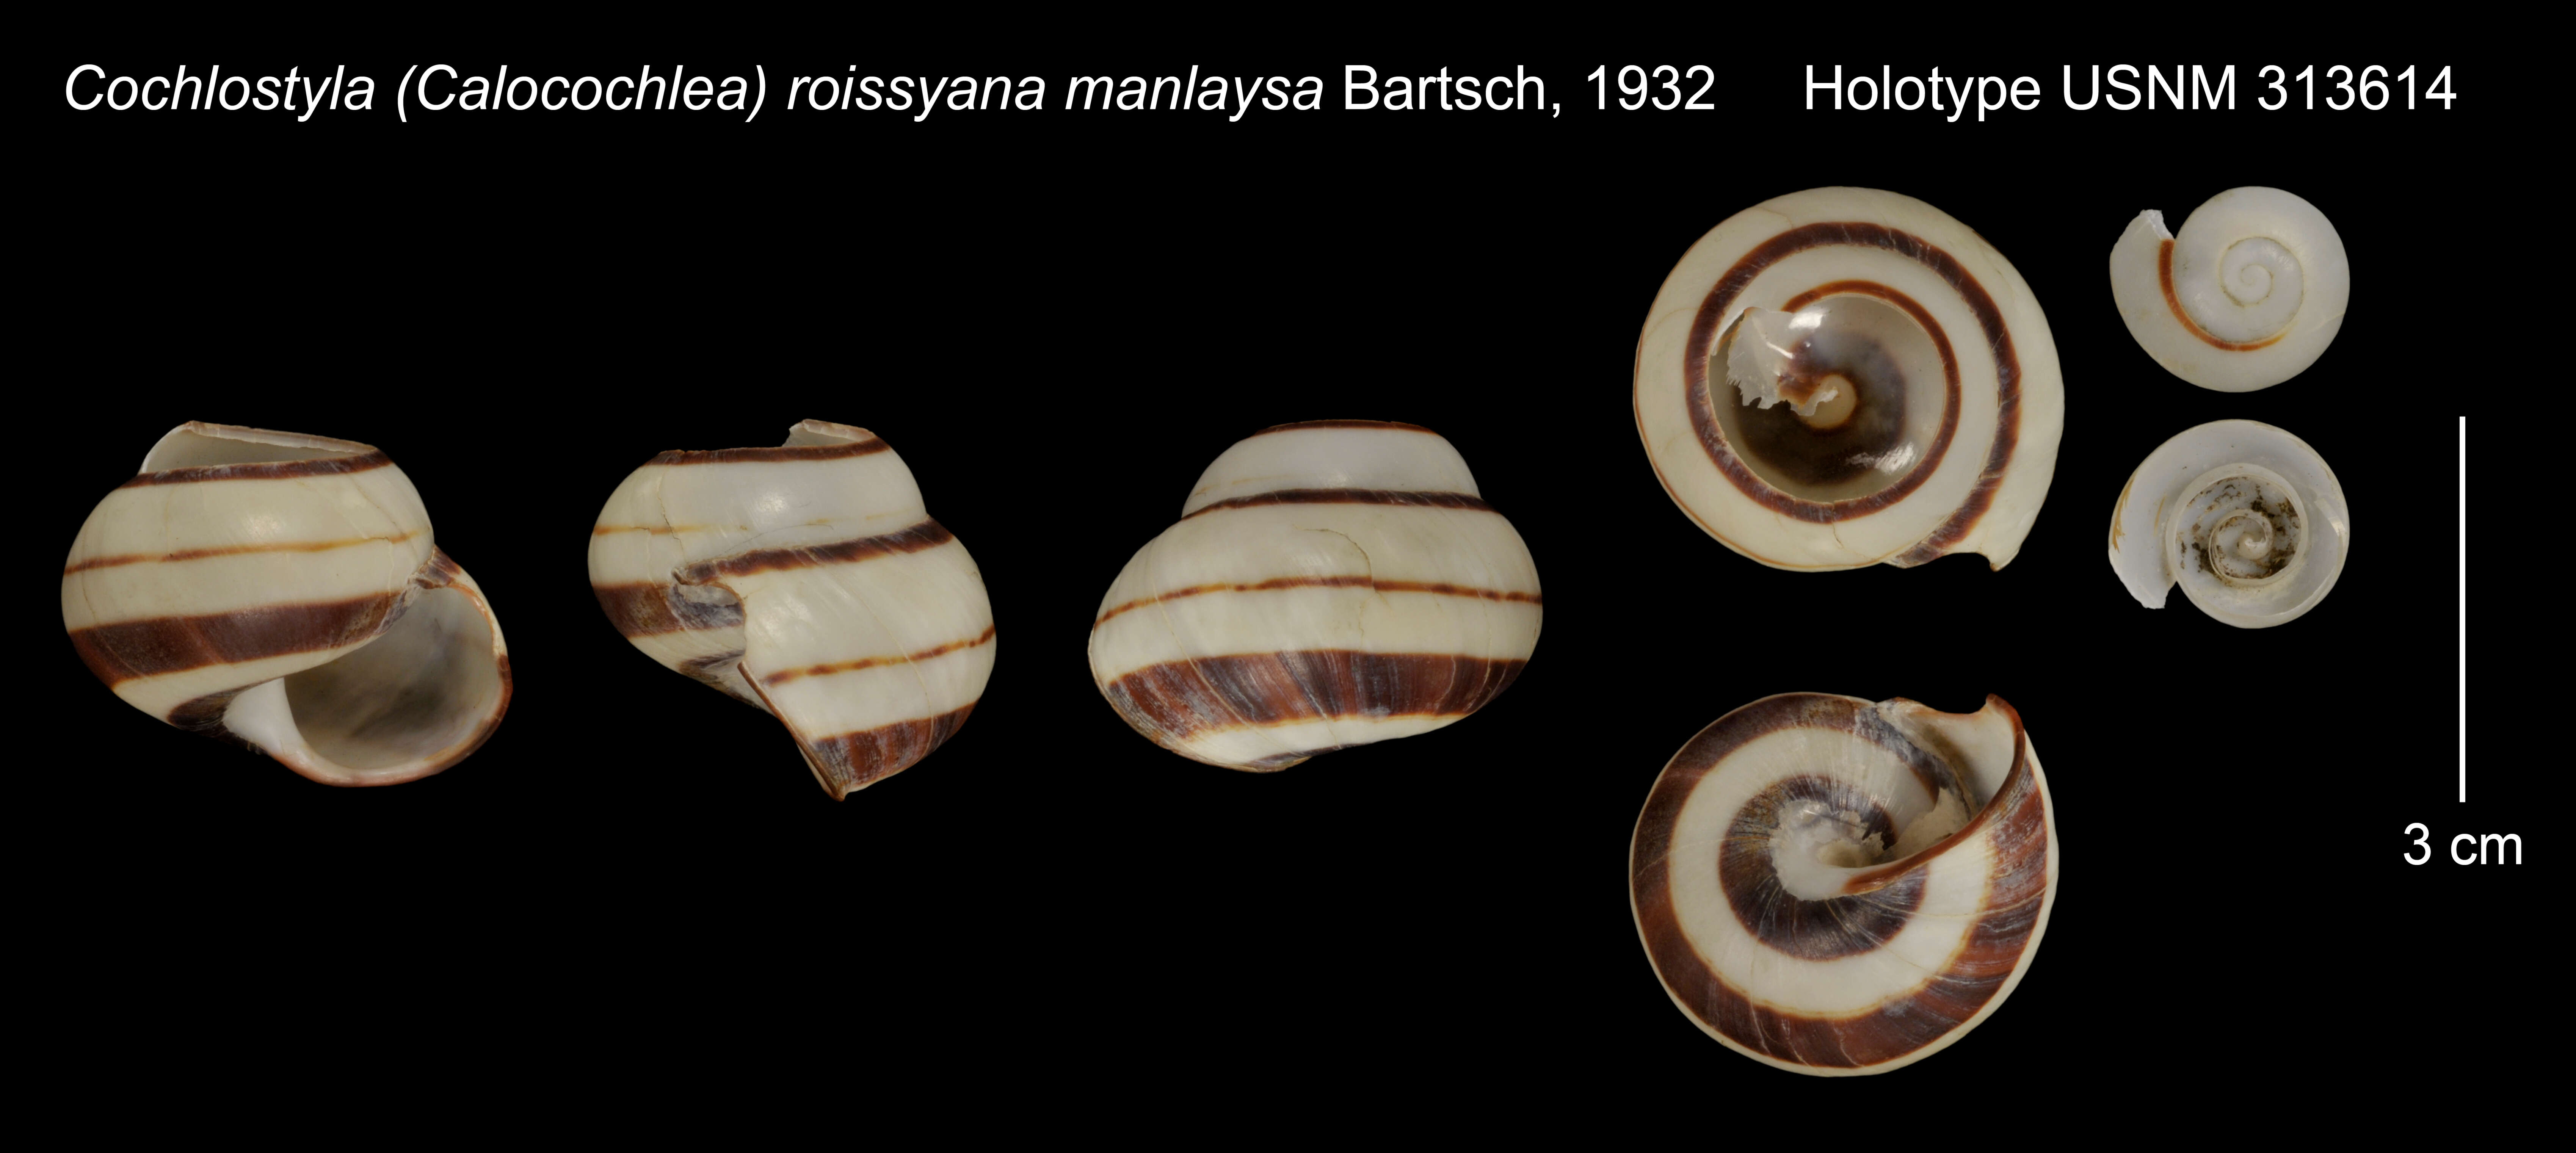 Image of Cochlostyla (Calocochlea) roissyana manlaysa Bartsch